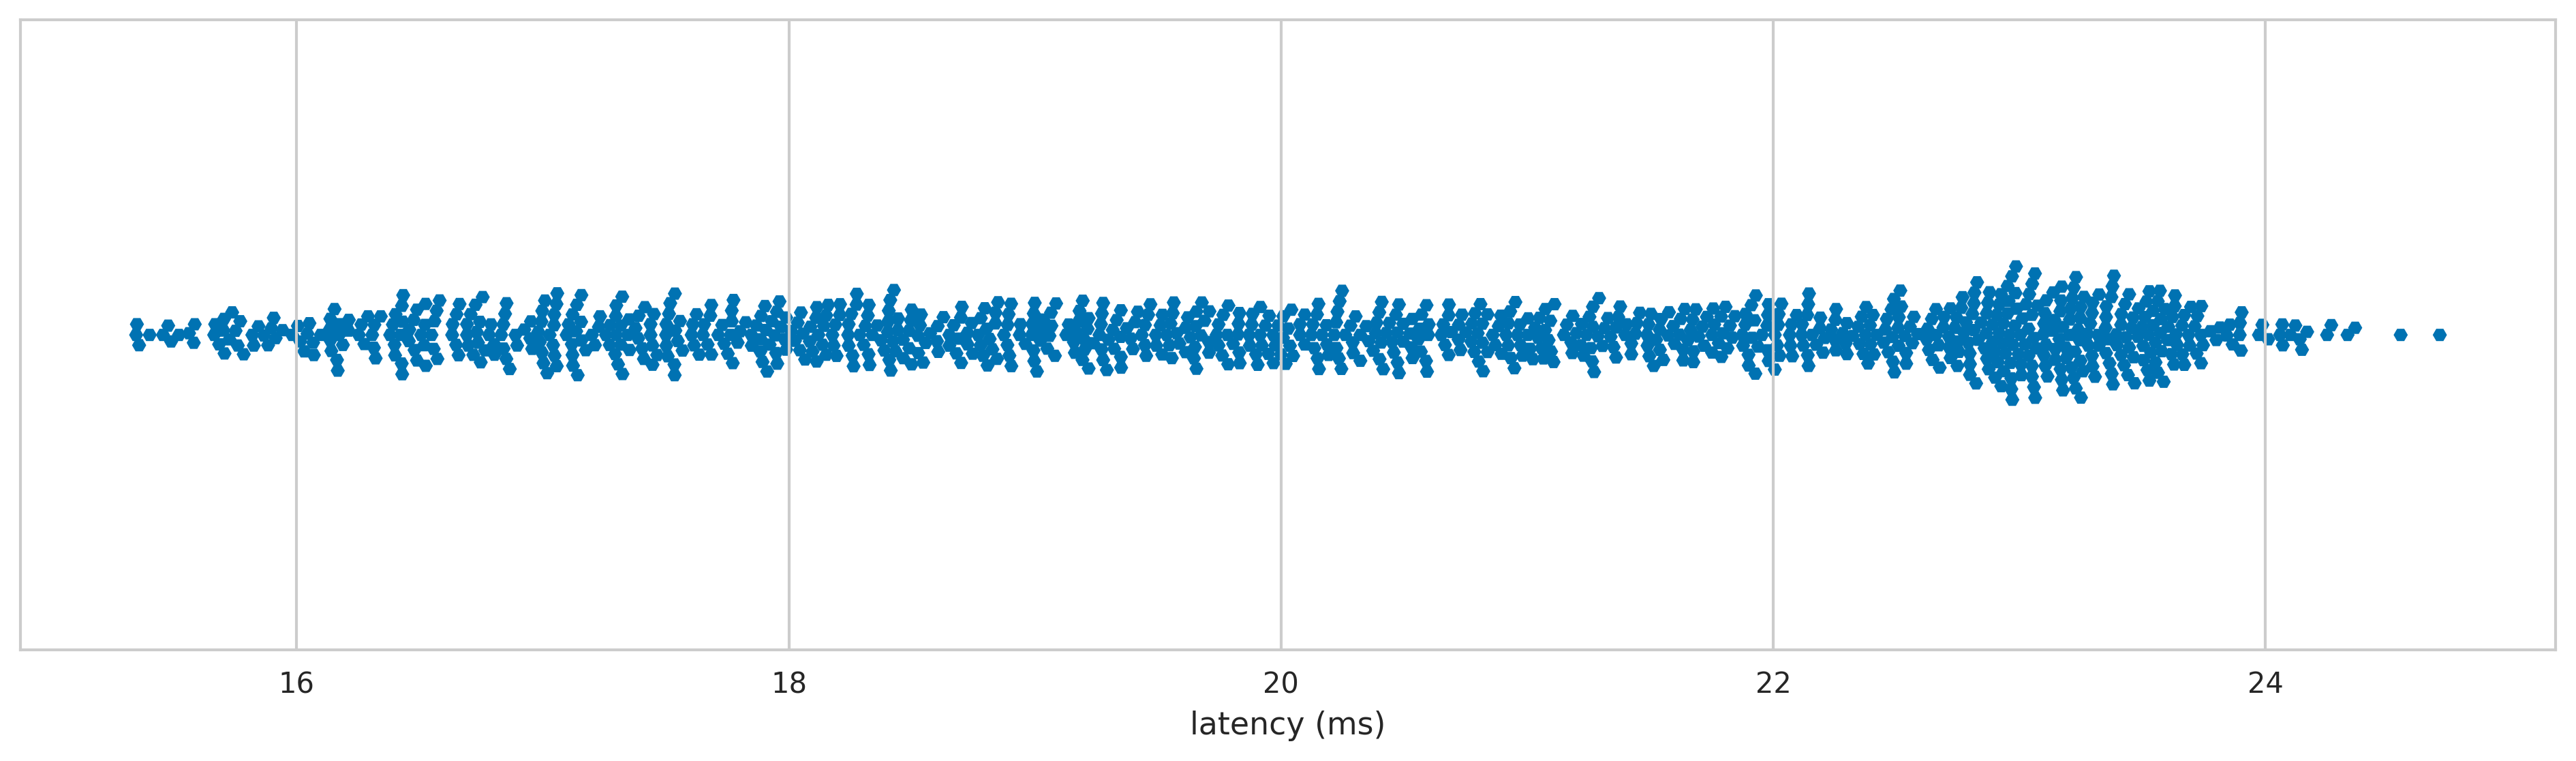 Sigma latency distribution 